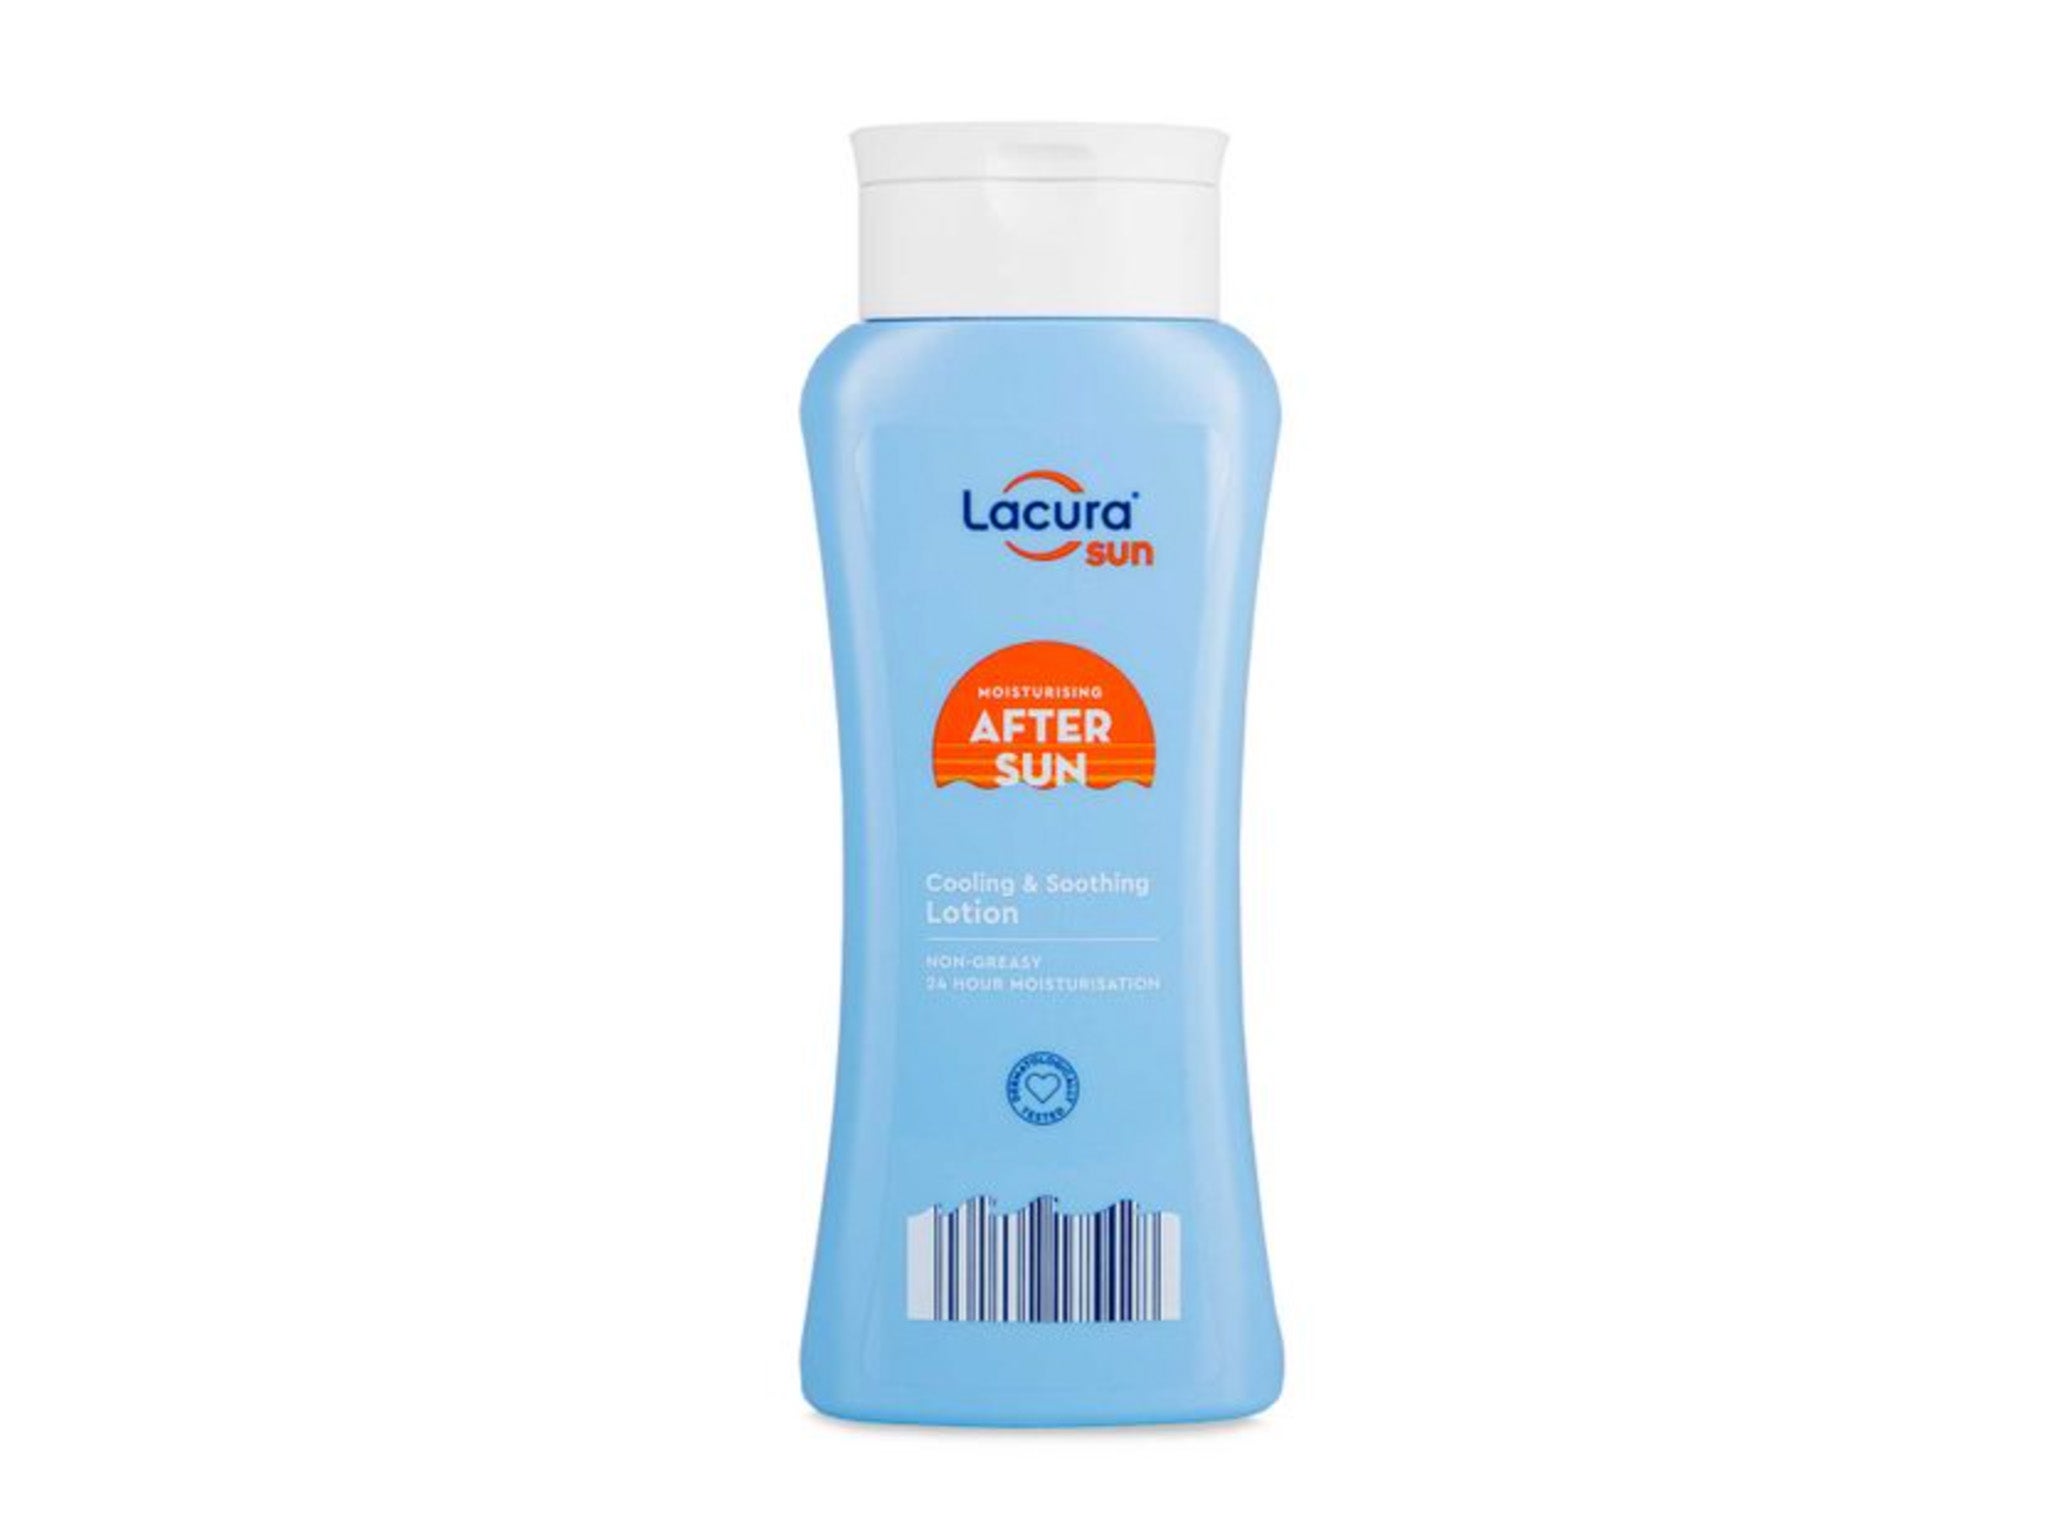 Lacura moisturising after sun lotion 200ml